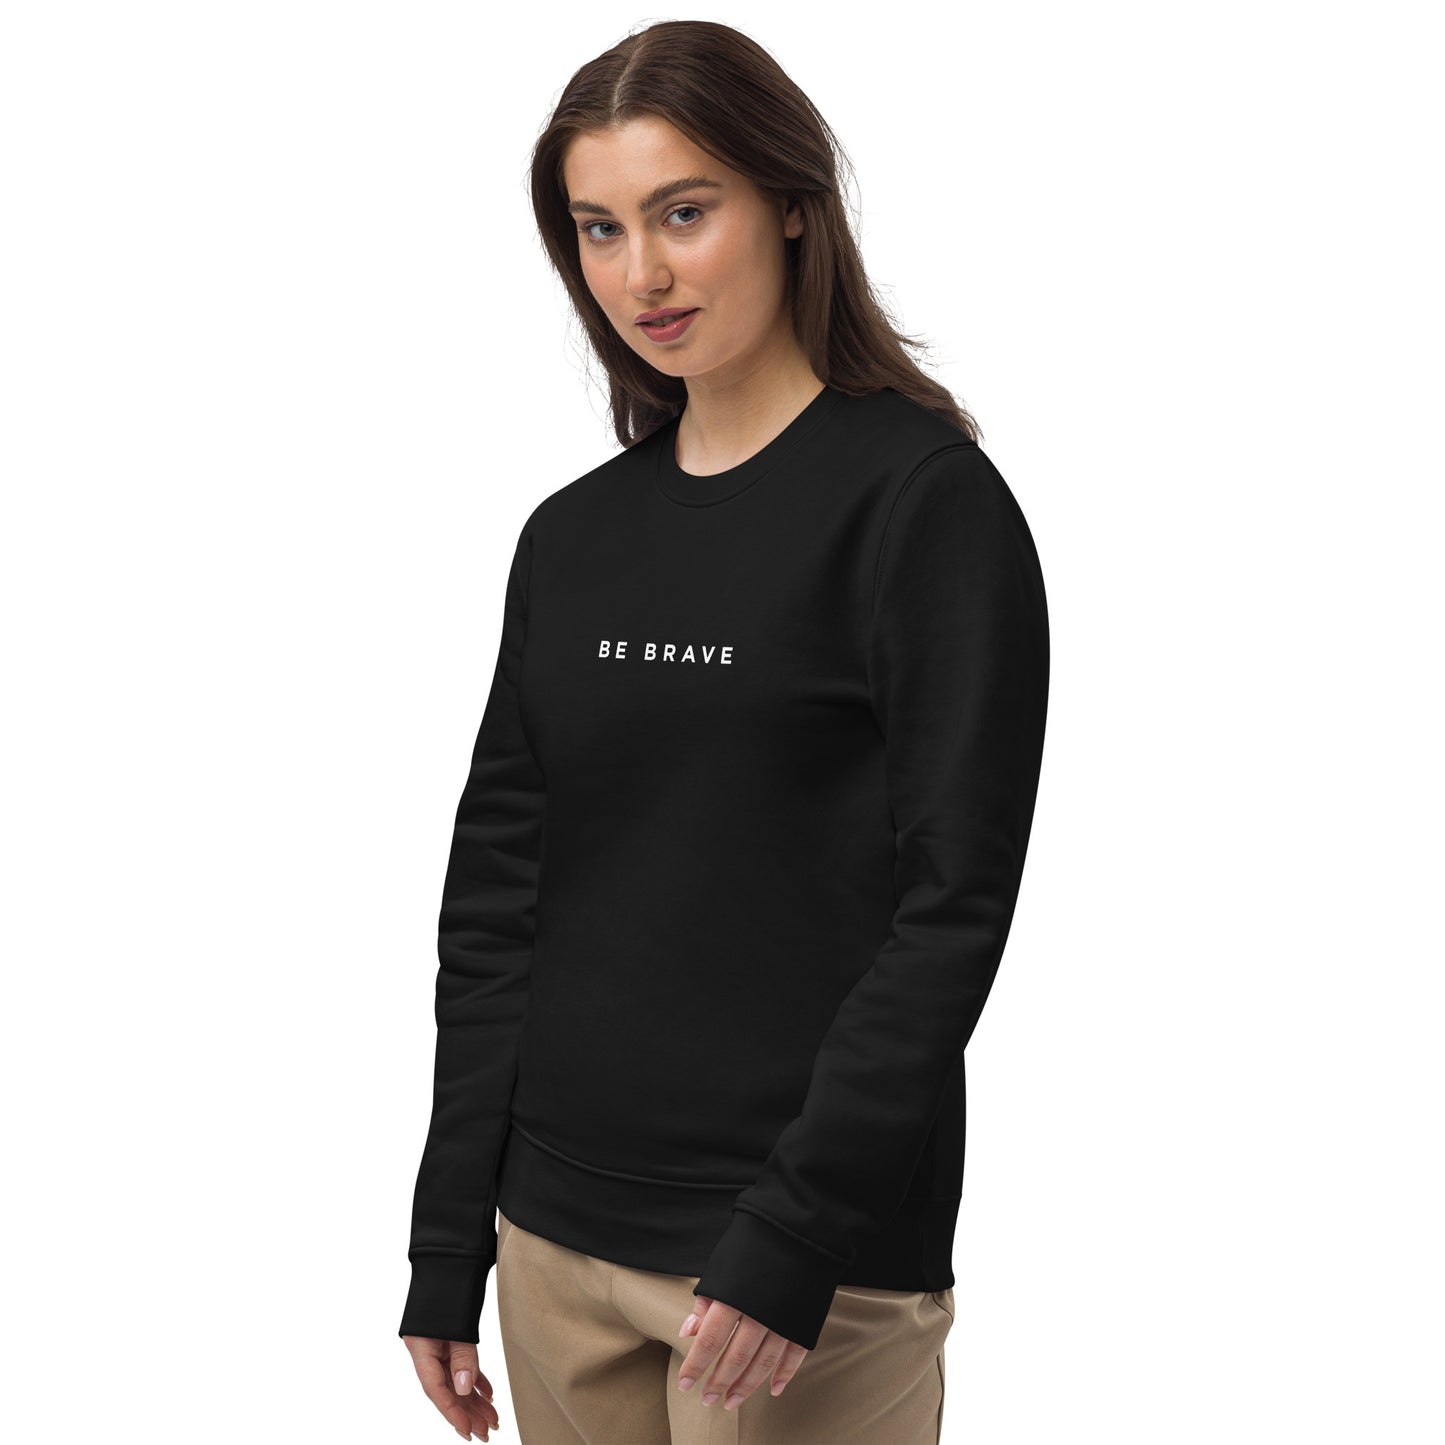 Be Brave Women's Organic Cotton Sweatshirt